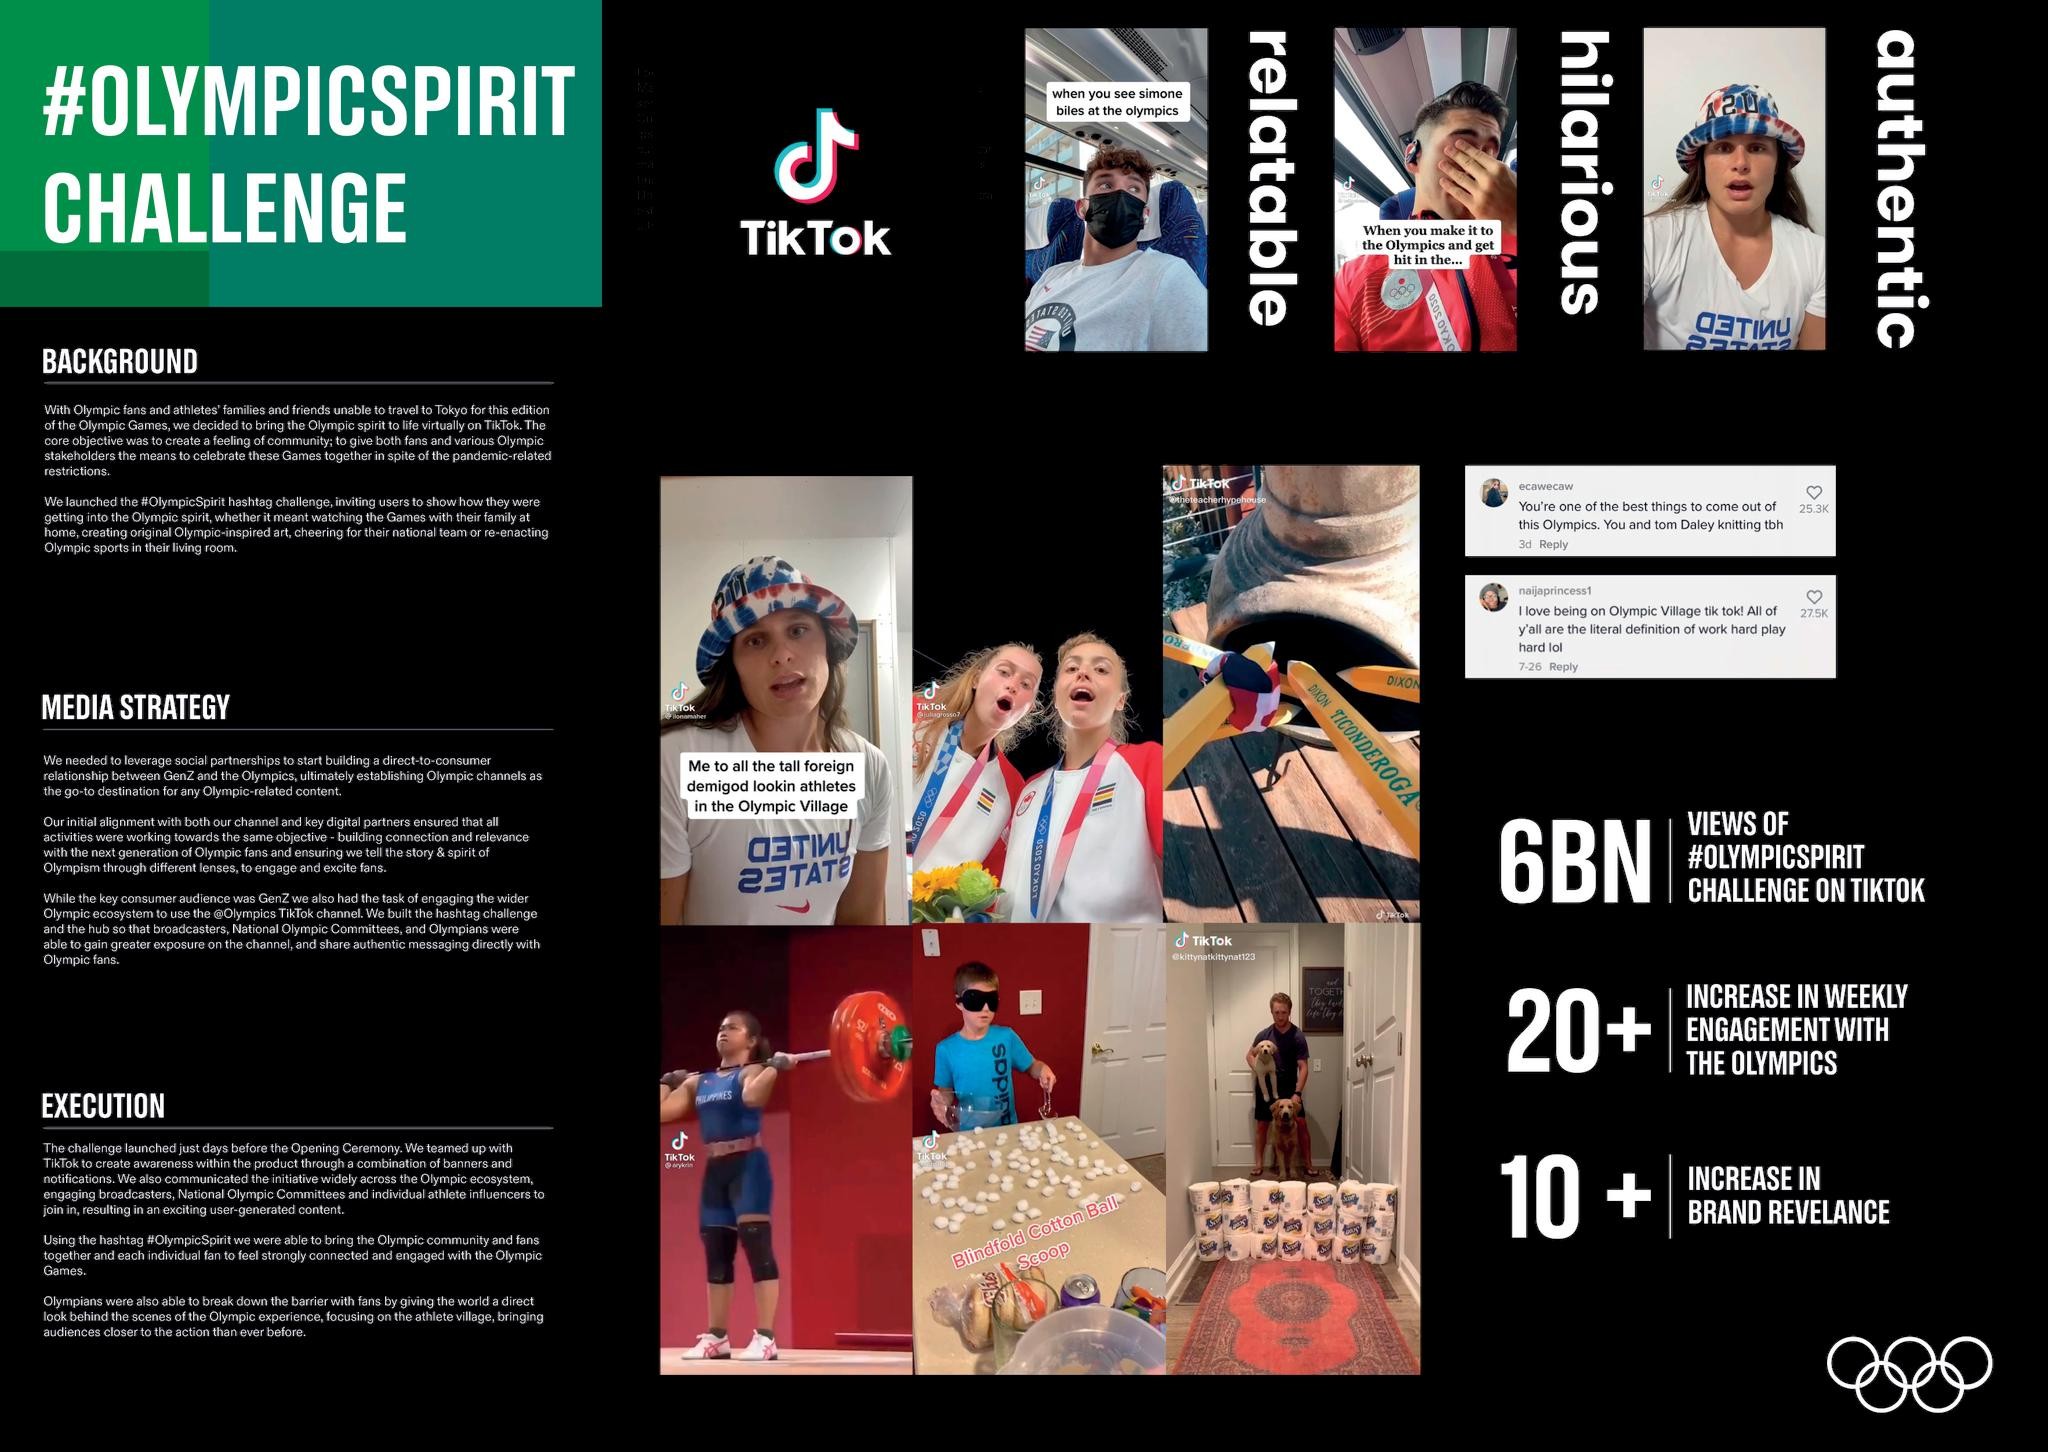 Global #OlympicSpirit Hashtag Challenge (TikTok)